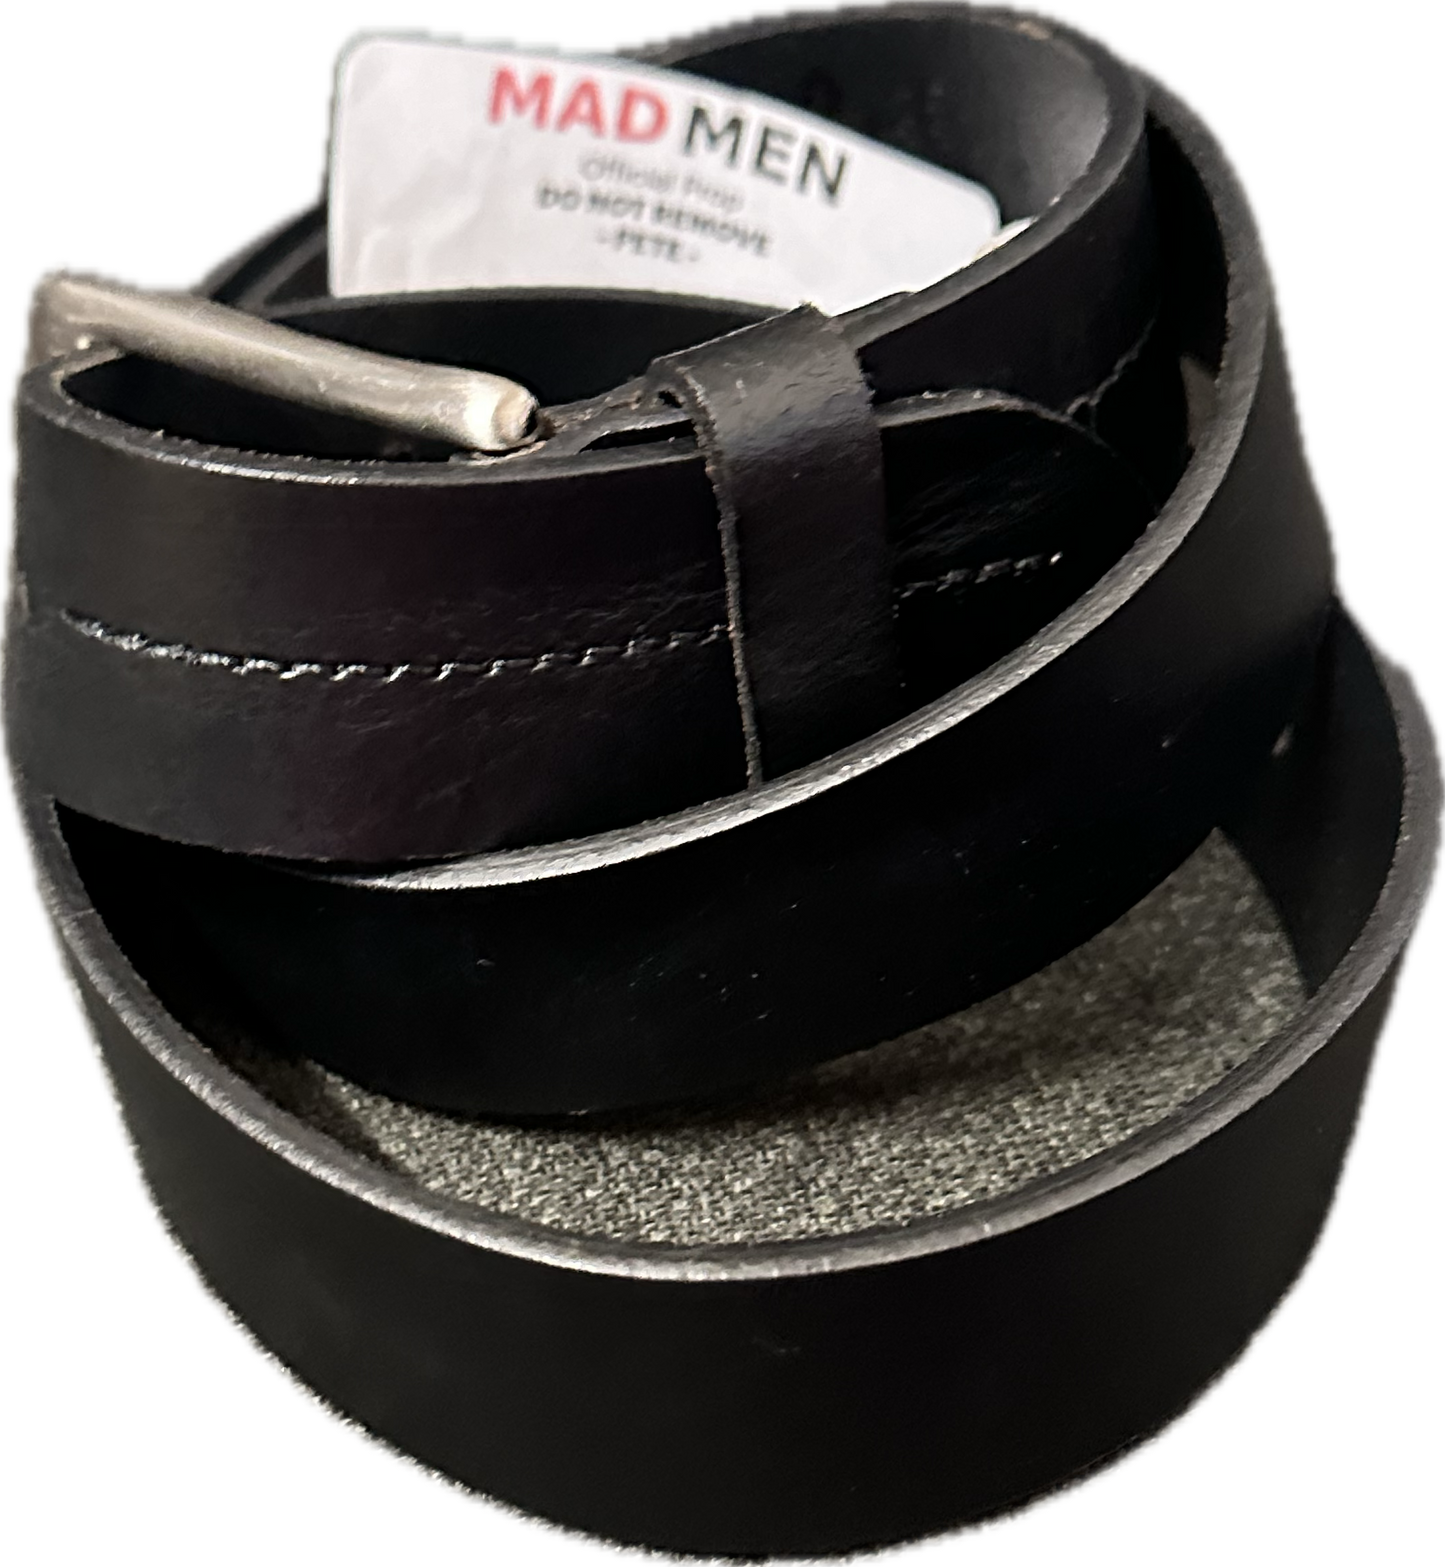 MAD MEN: Pete Campbell's 1960s Black Leather Belt (30-32)